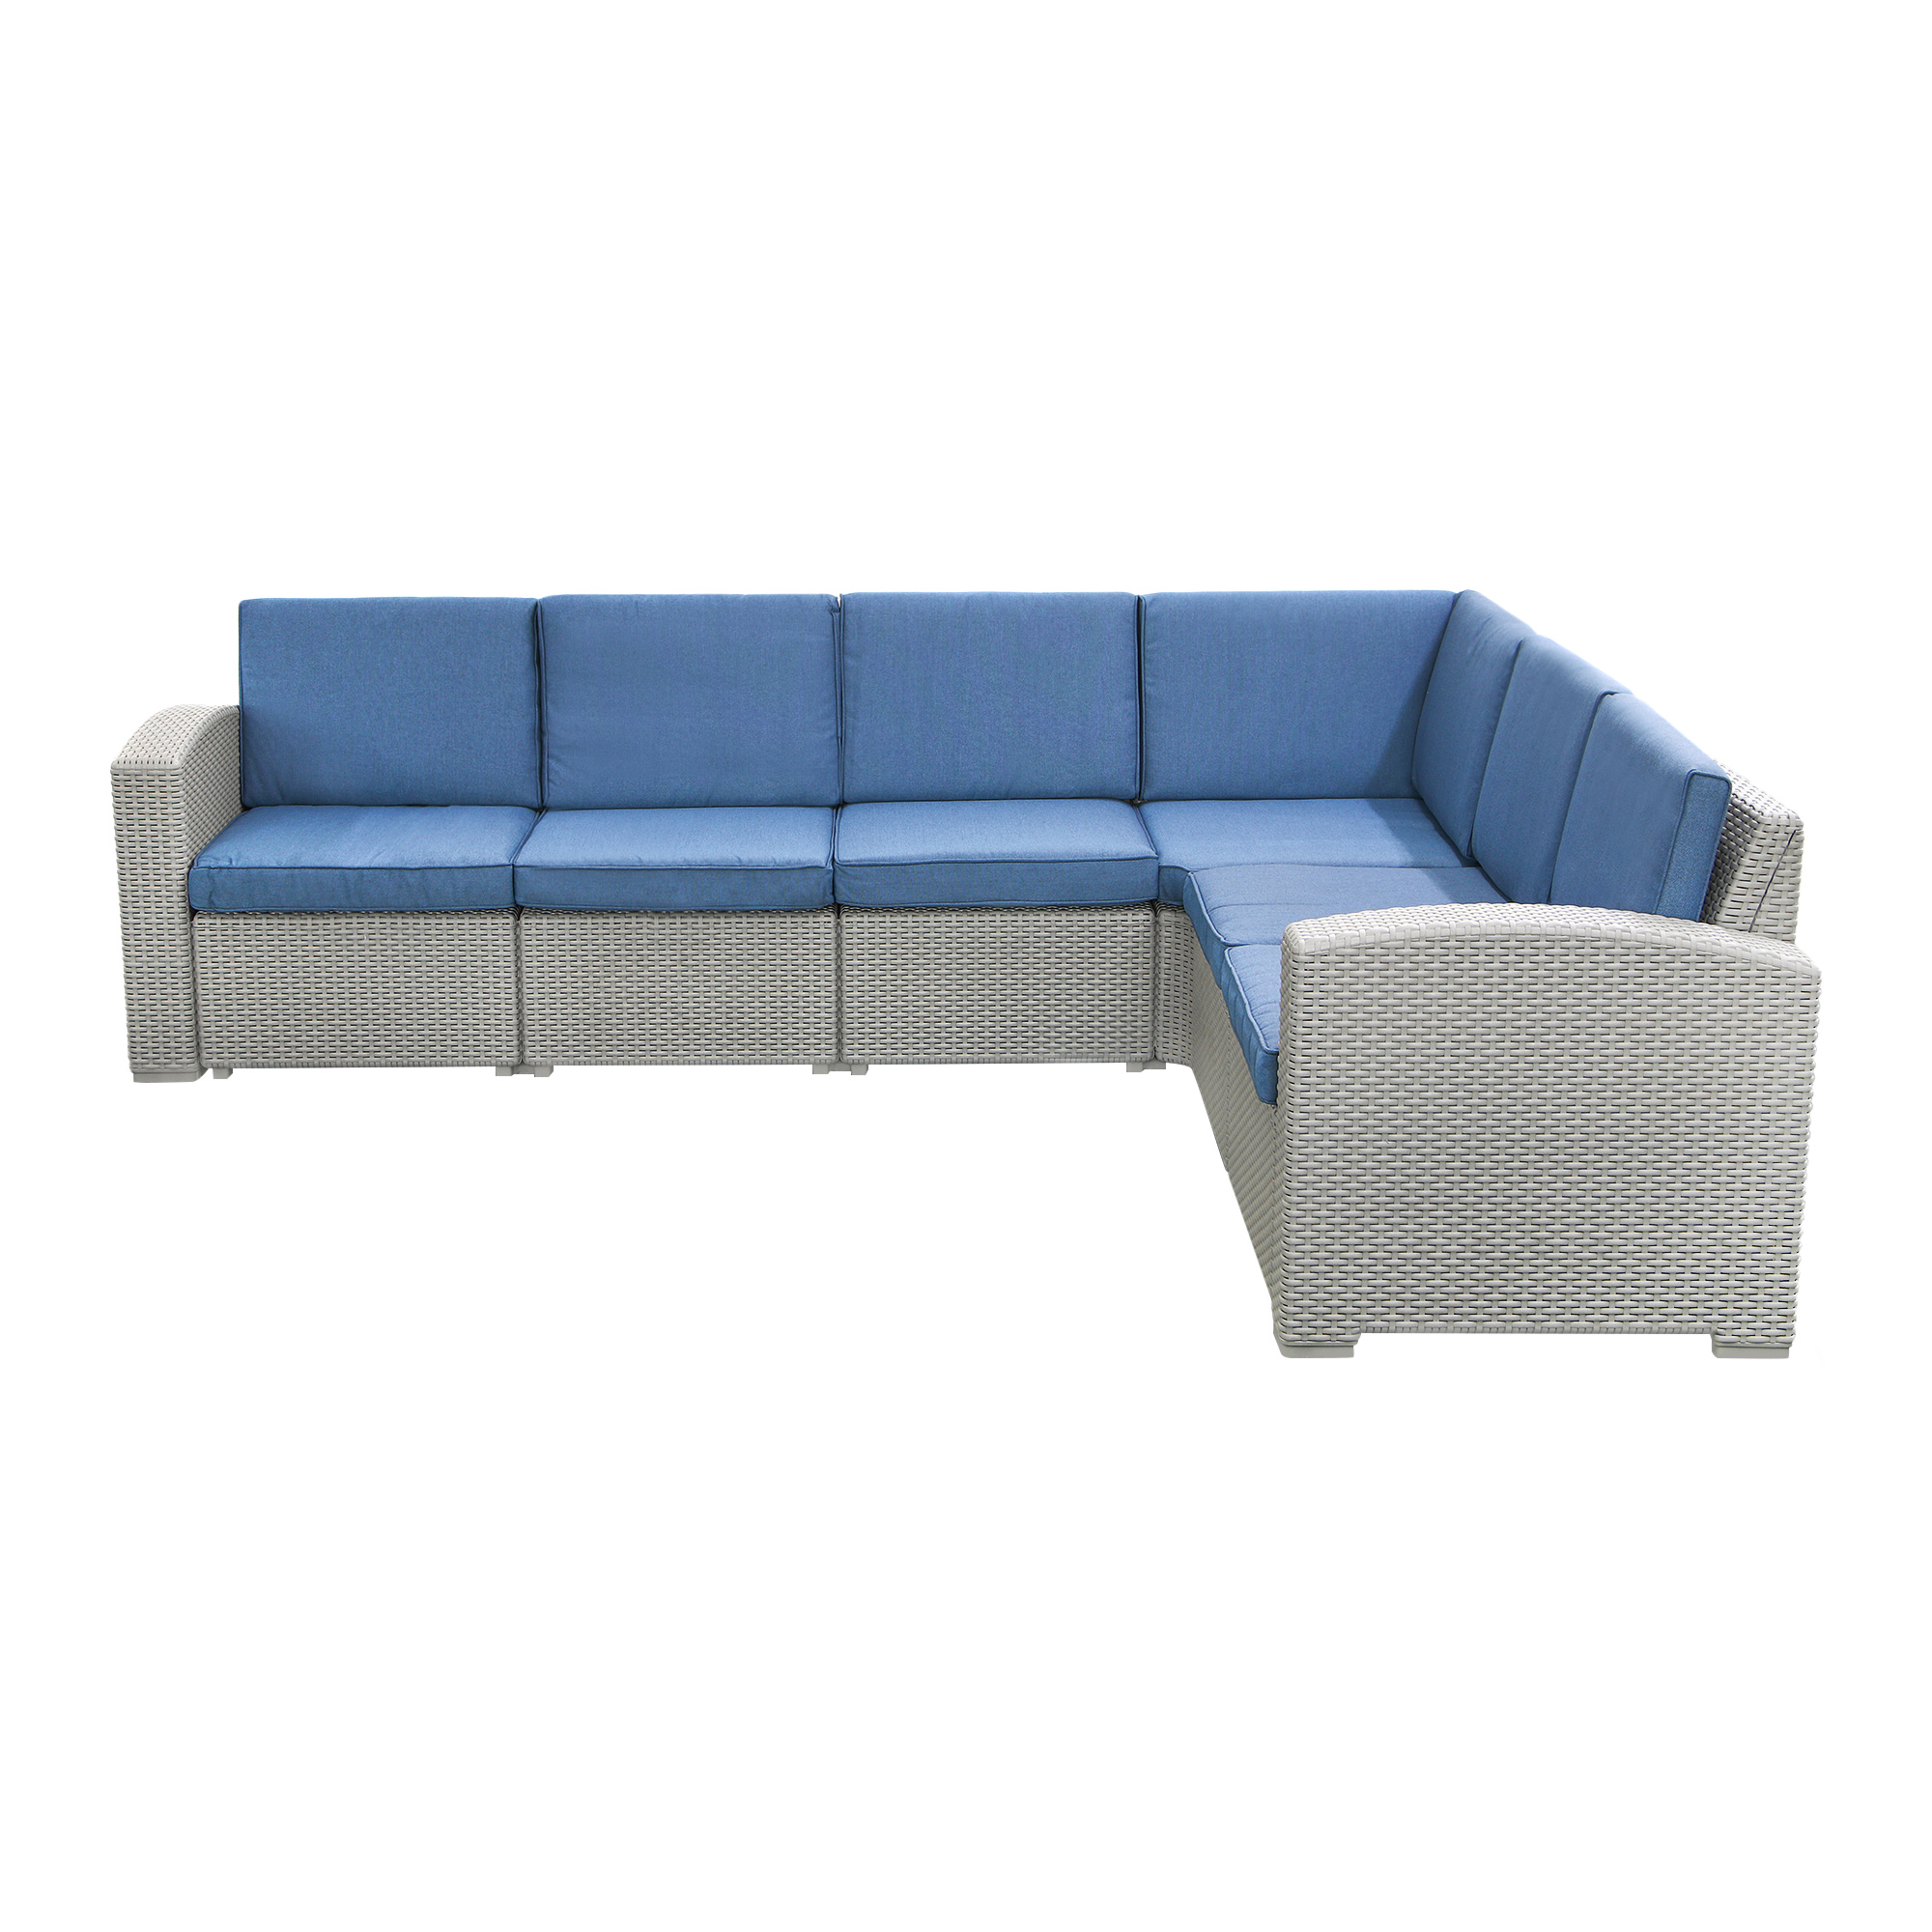 Комплект мебели LF угловой серый, цвет синий, размер 260/210х70х80 - фото 2